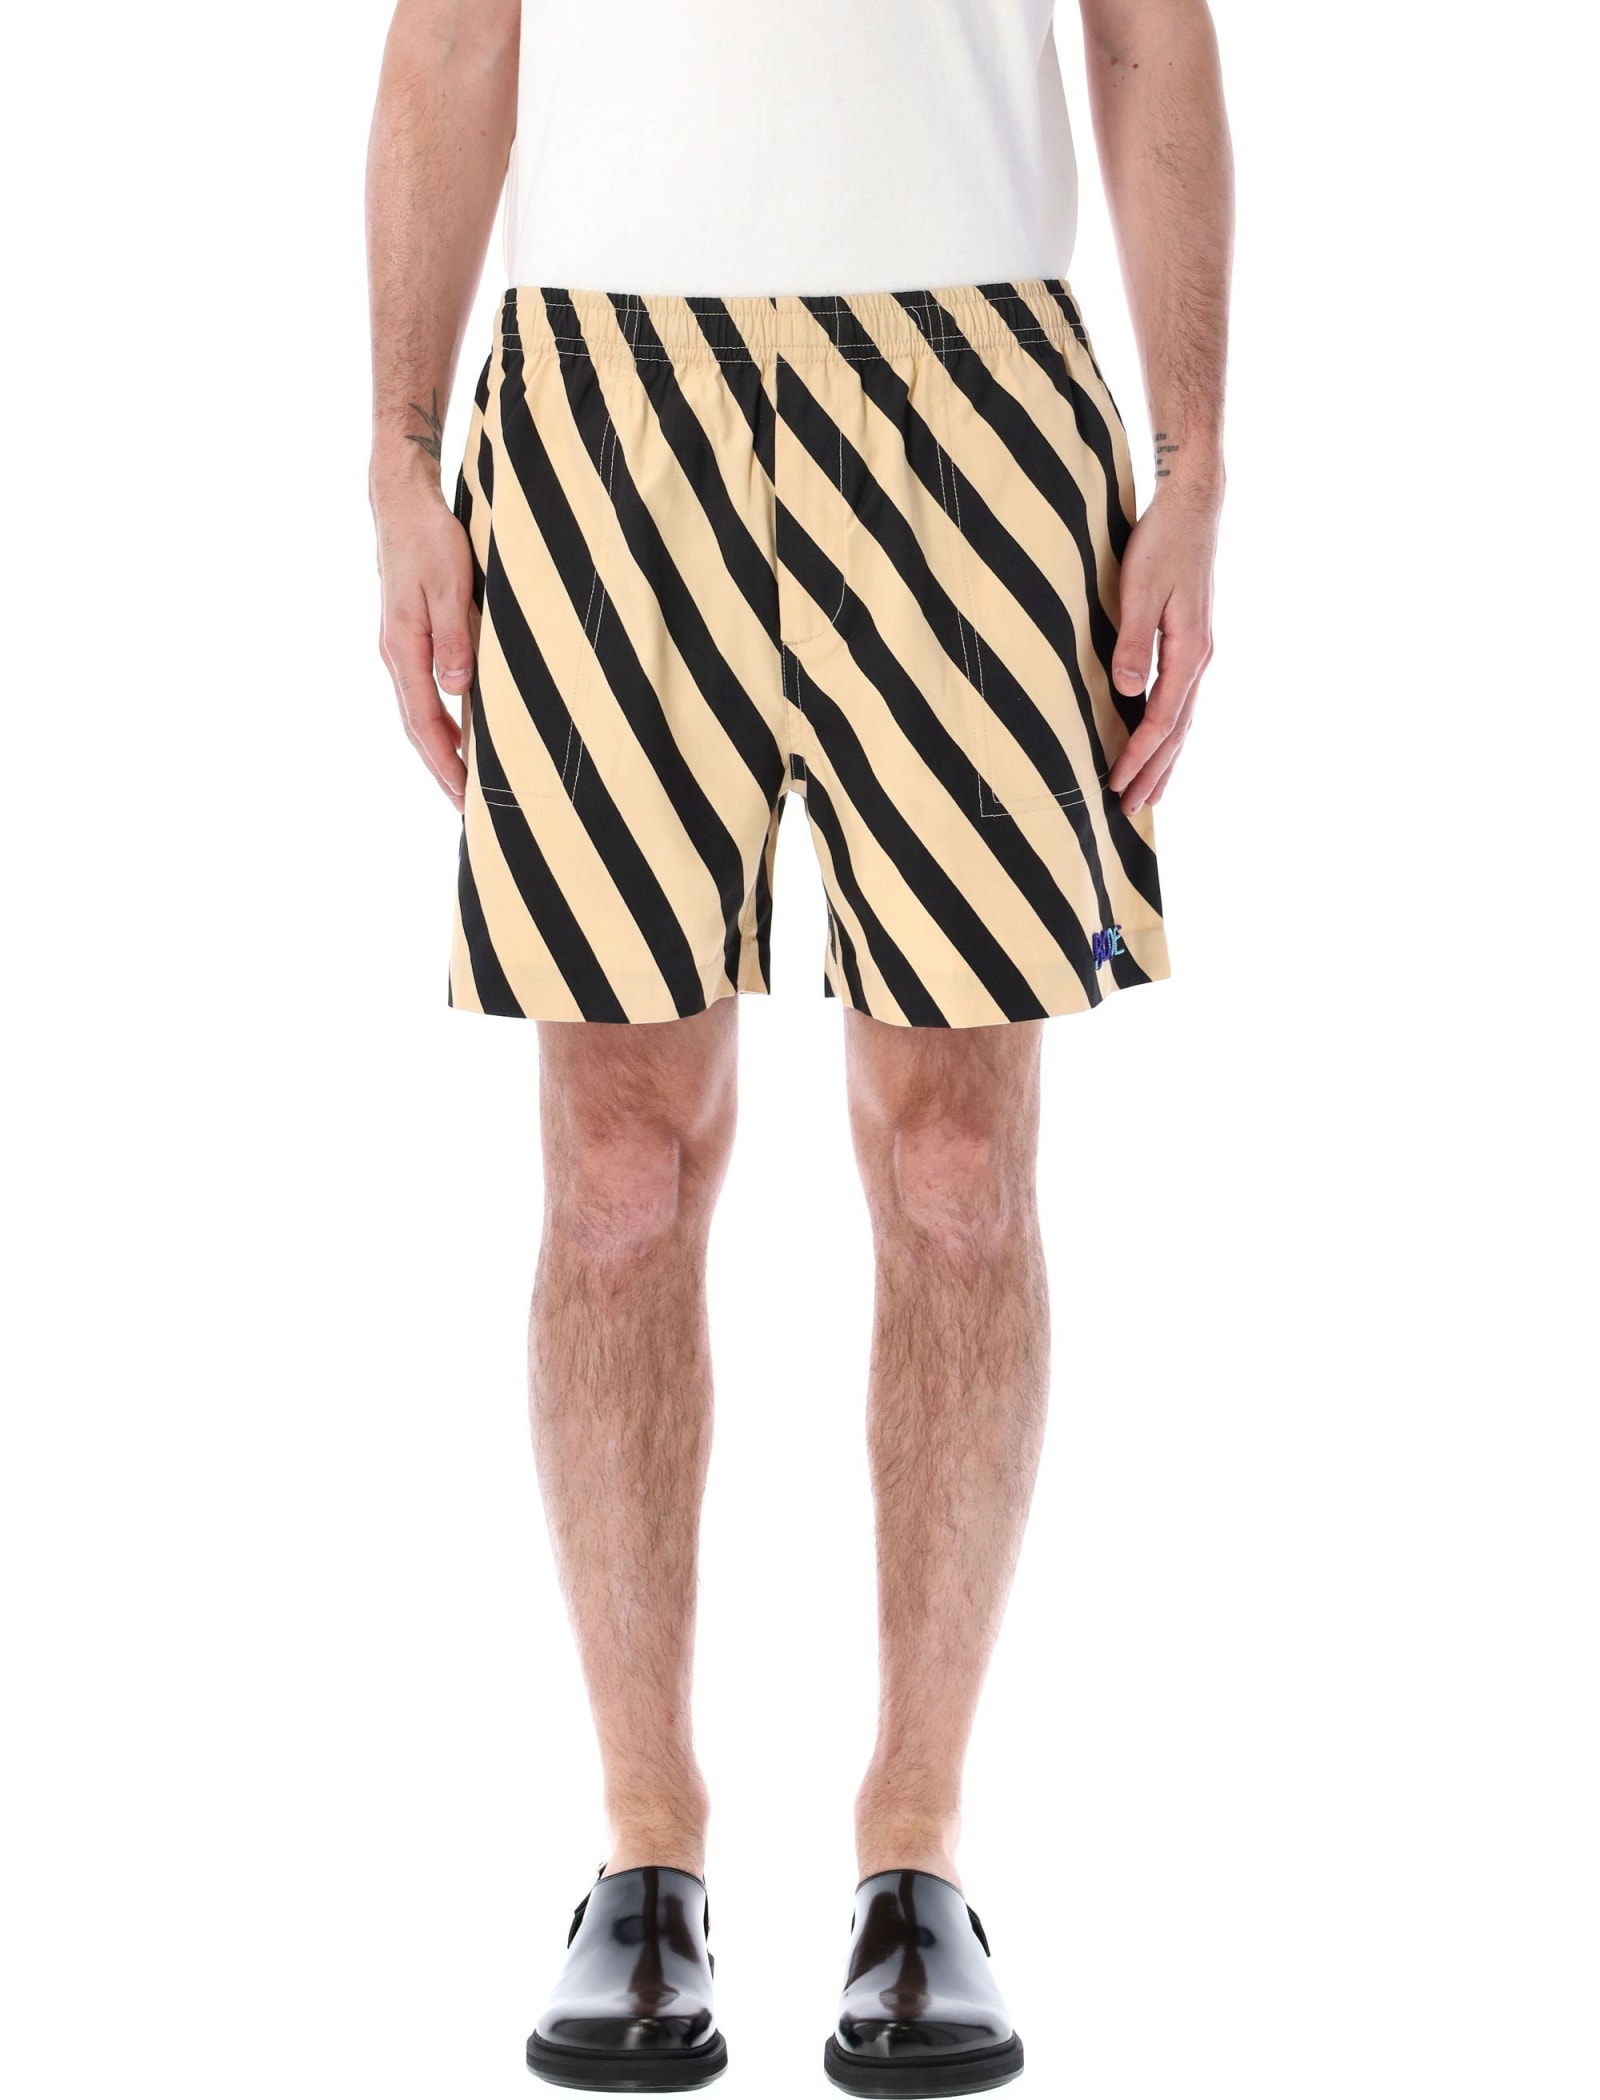 Domino Stripe Shorts